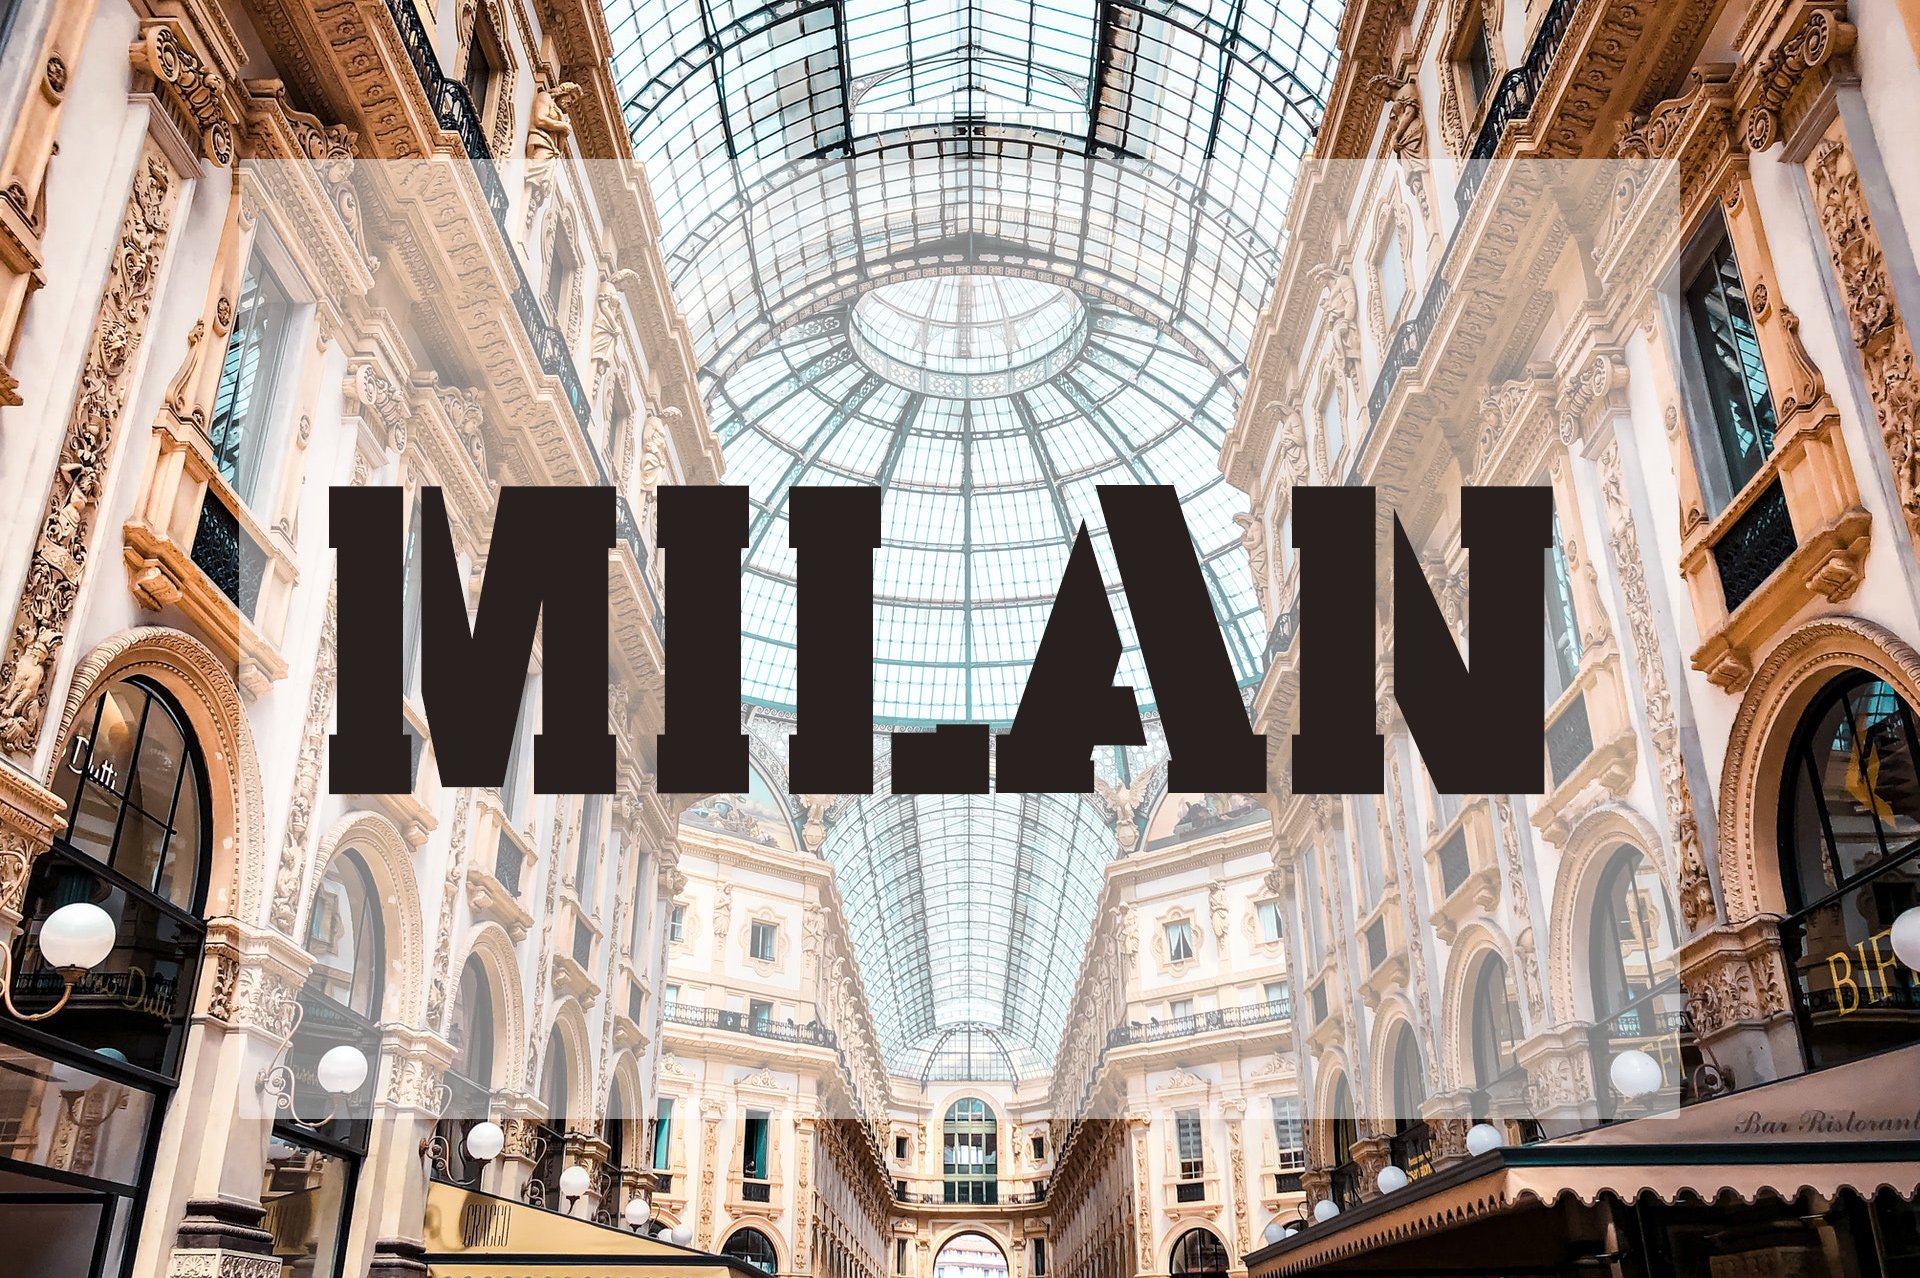 Milan Stencil - Urban City Font cover image.